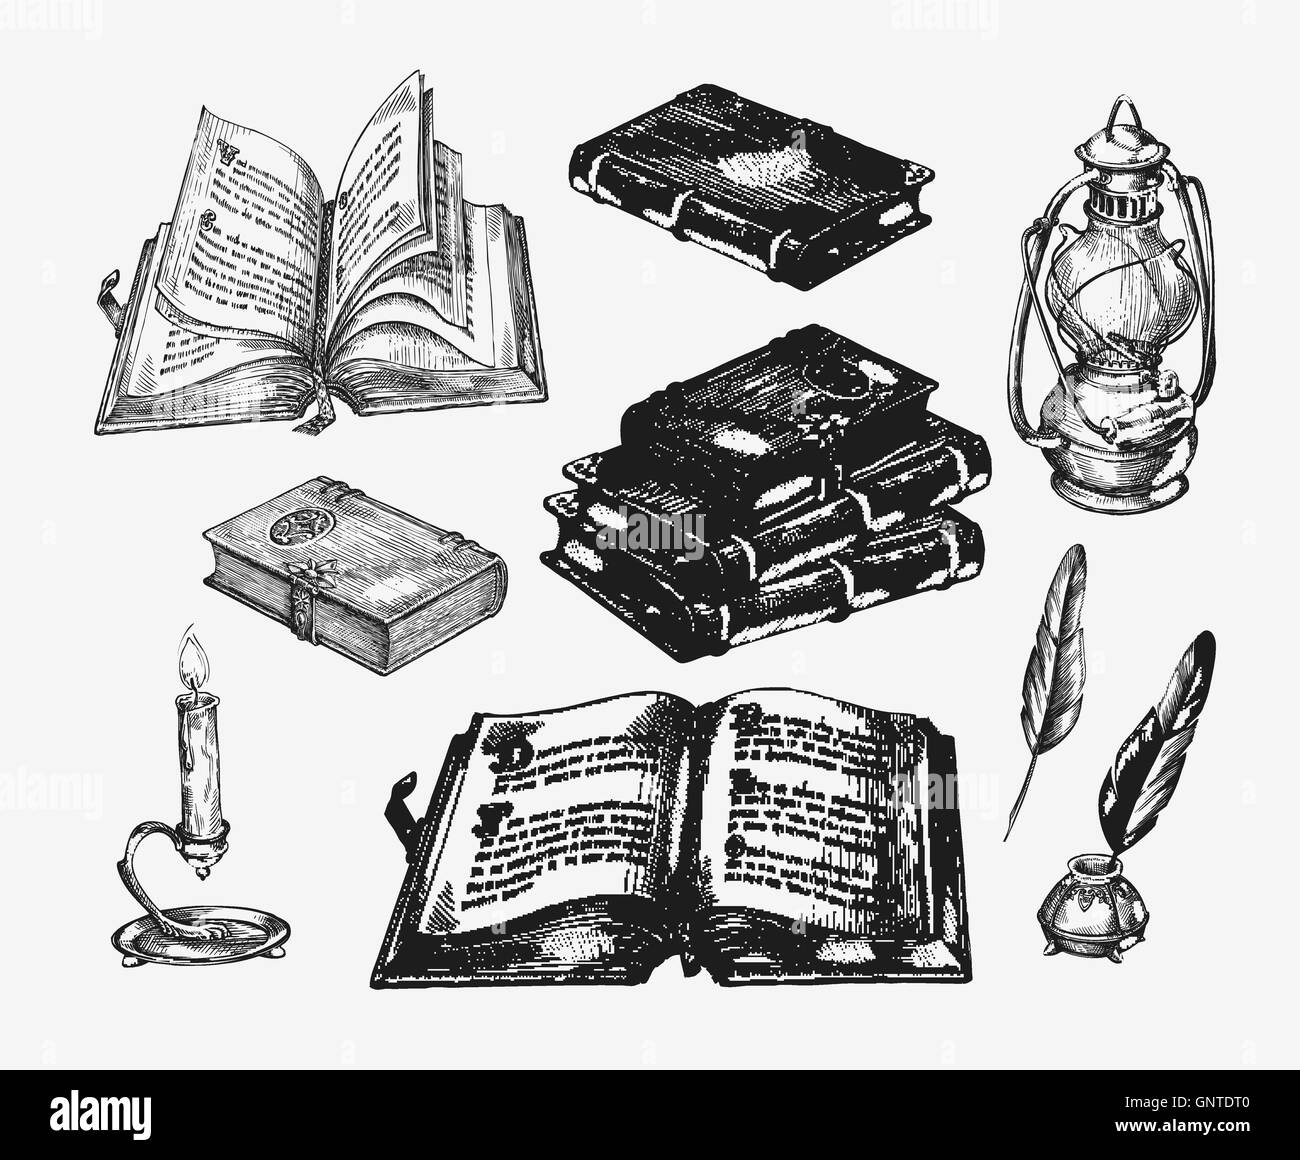 https://c8.alamy.com/comp/GNTDT0/hand-drawn-vintage-books-sketch-old-school-literature-vector-illustration-GNTDT0.jpg